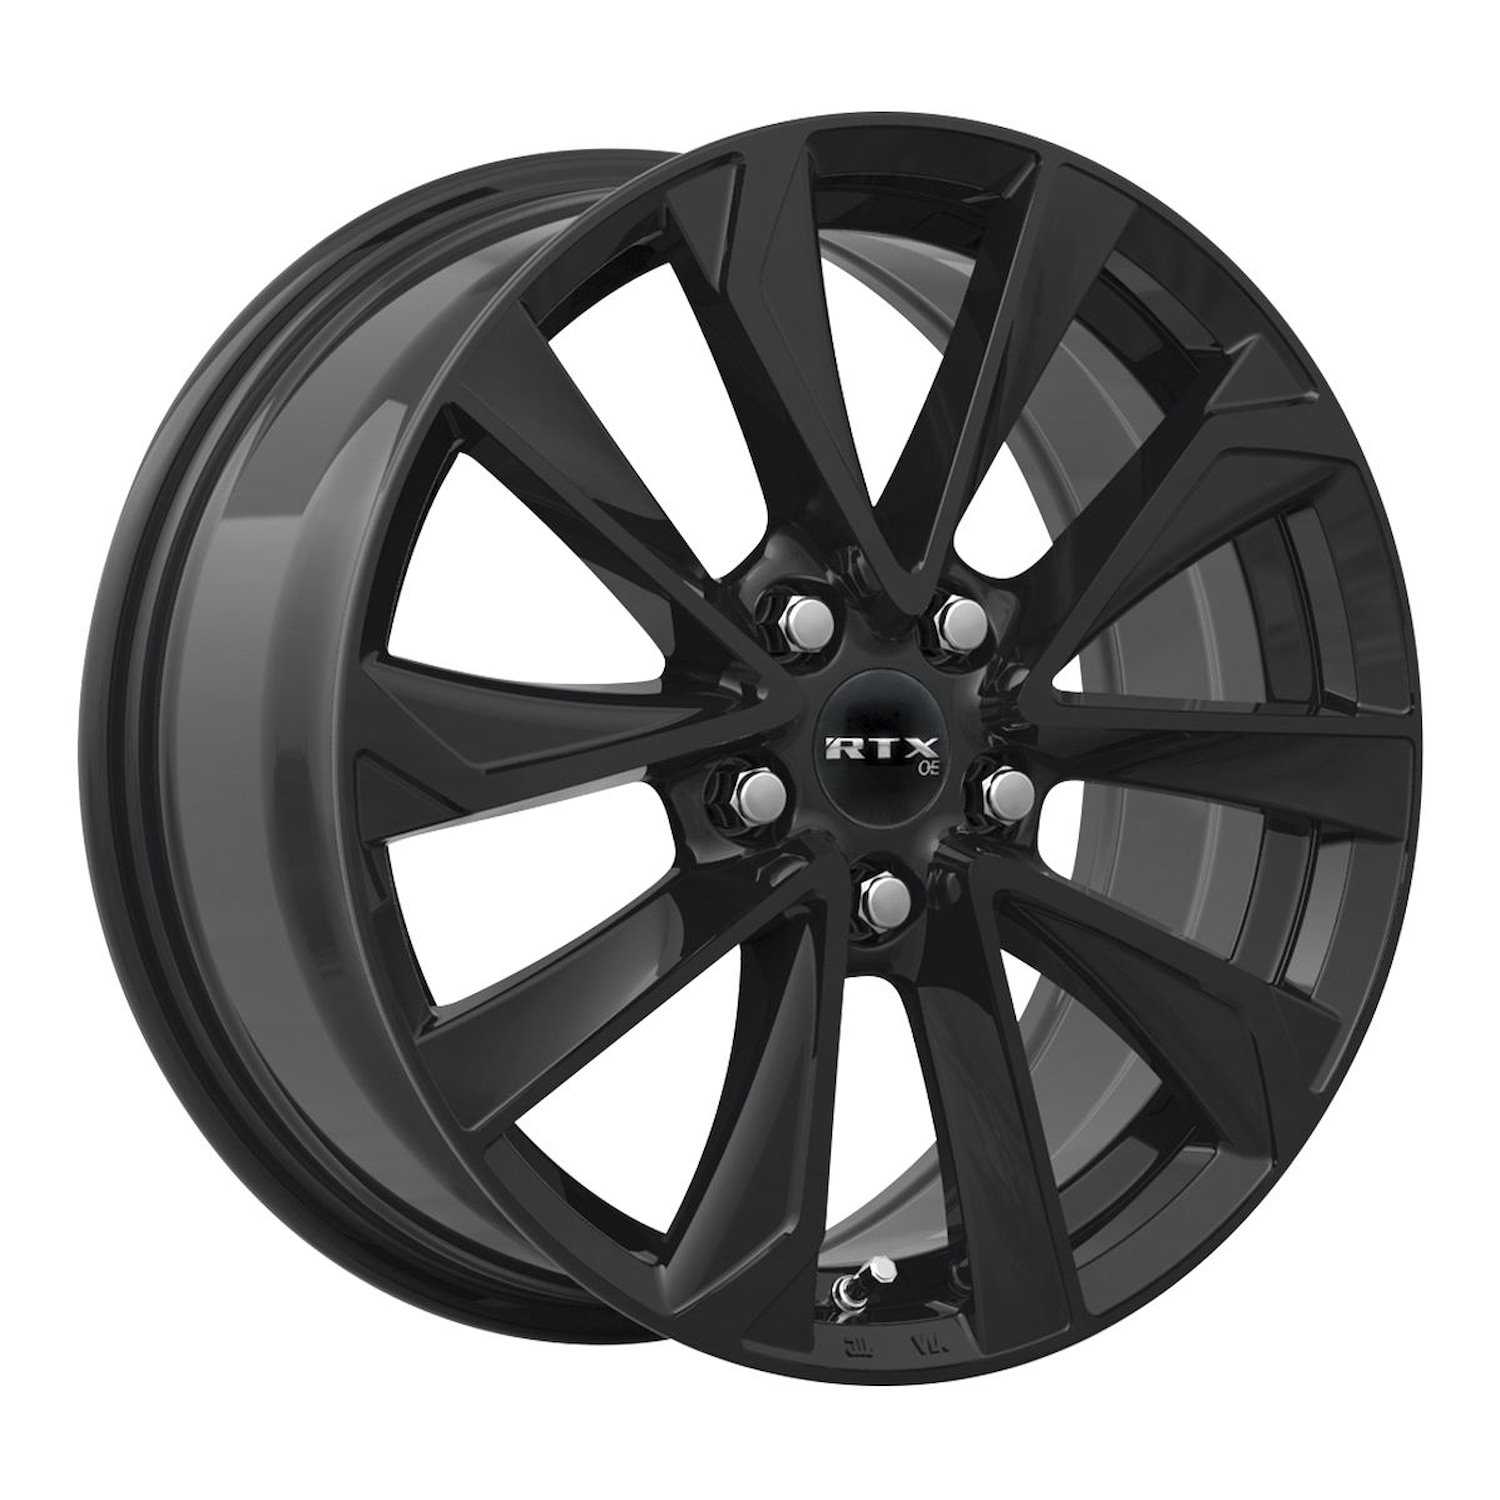 083060 OE-Series Noda Wheel [Size: 18" x 7.50"] Gloss Black Finish